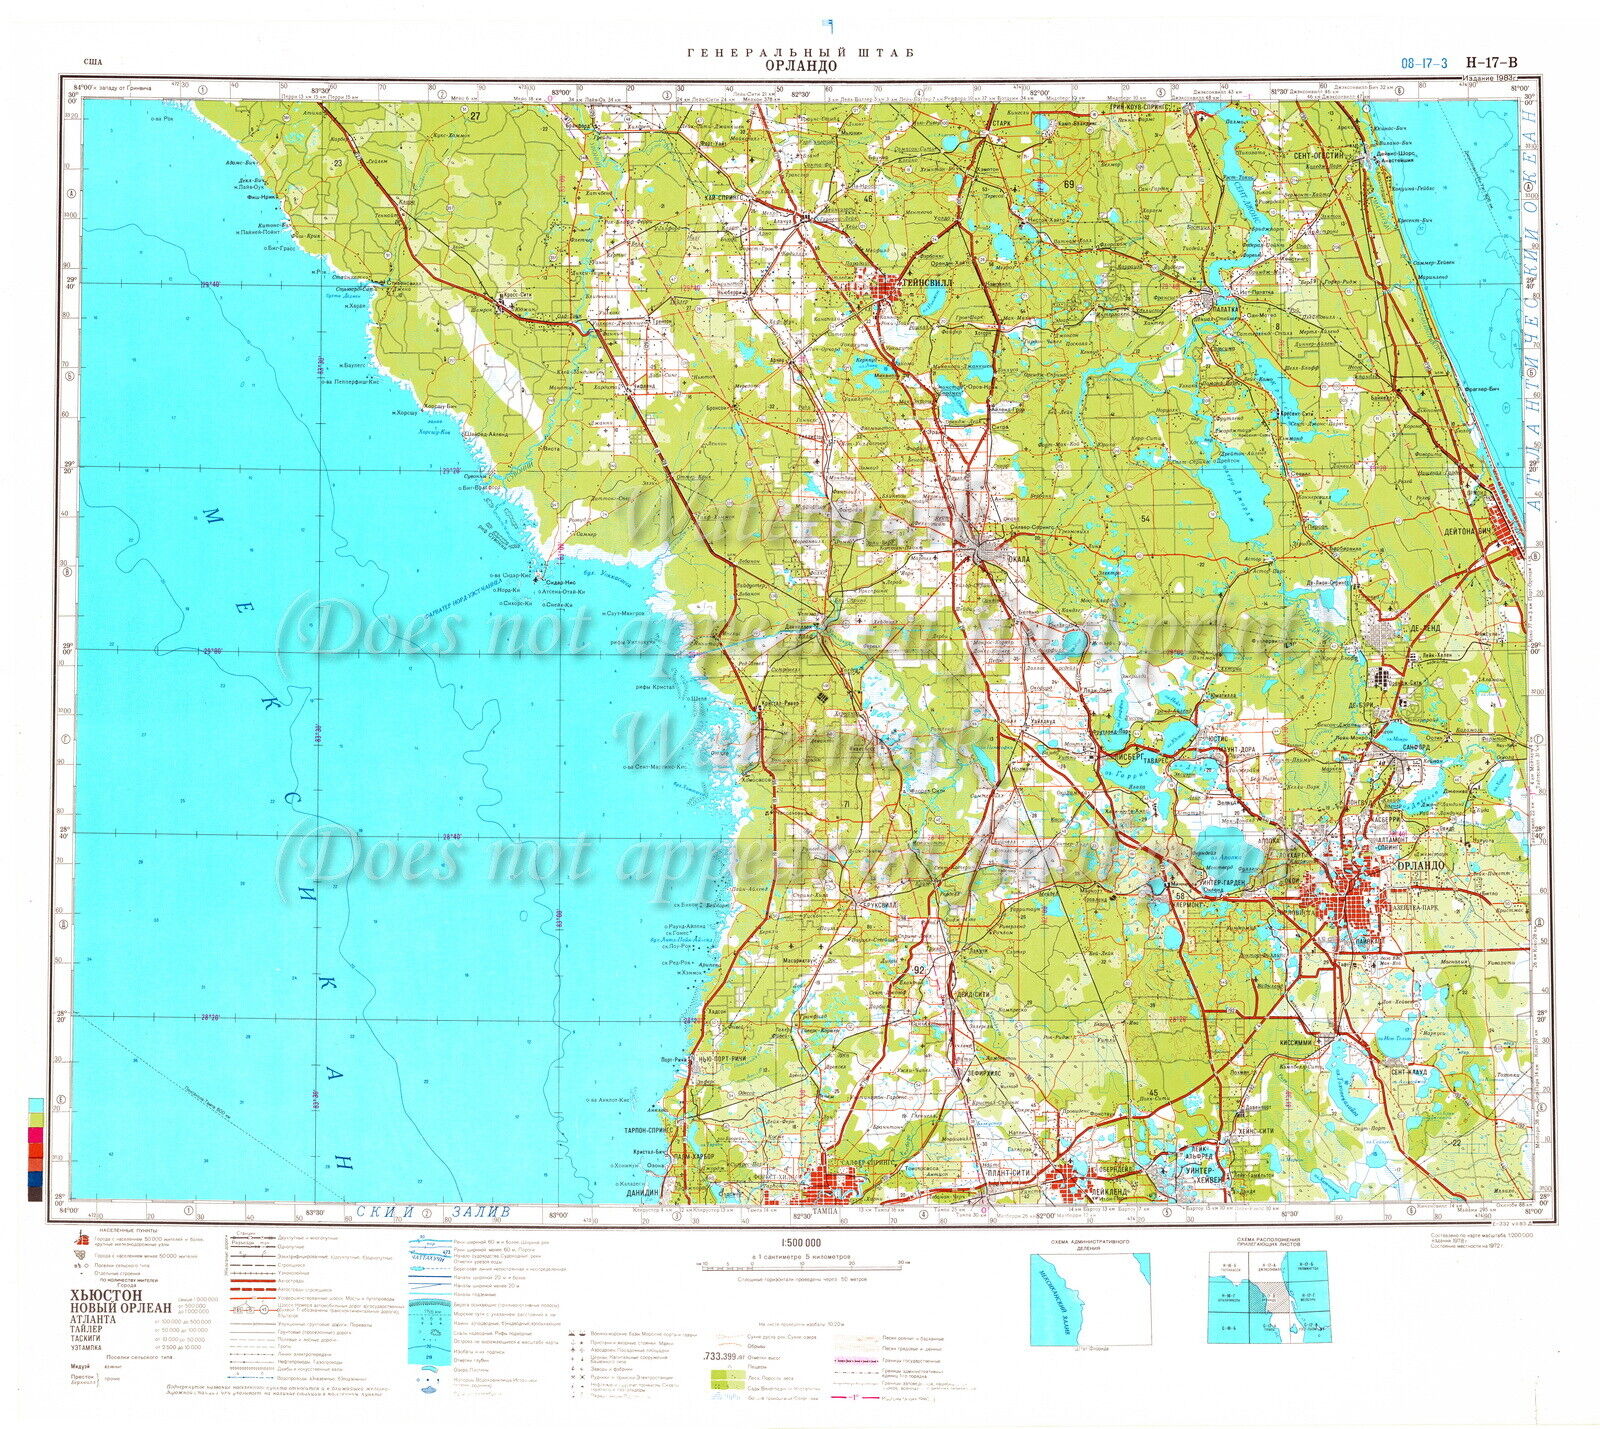 Soviet Russian Topographic Map ORLANDO FLORIDA USA 1:500K Ed.1983 REPRINT POSTER